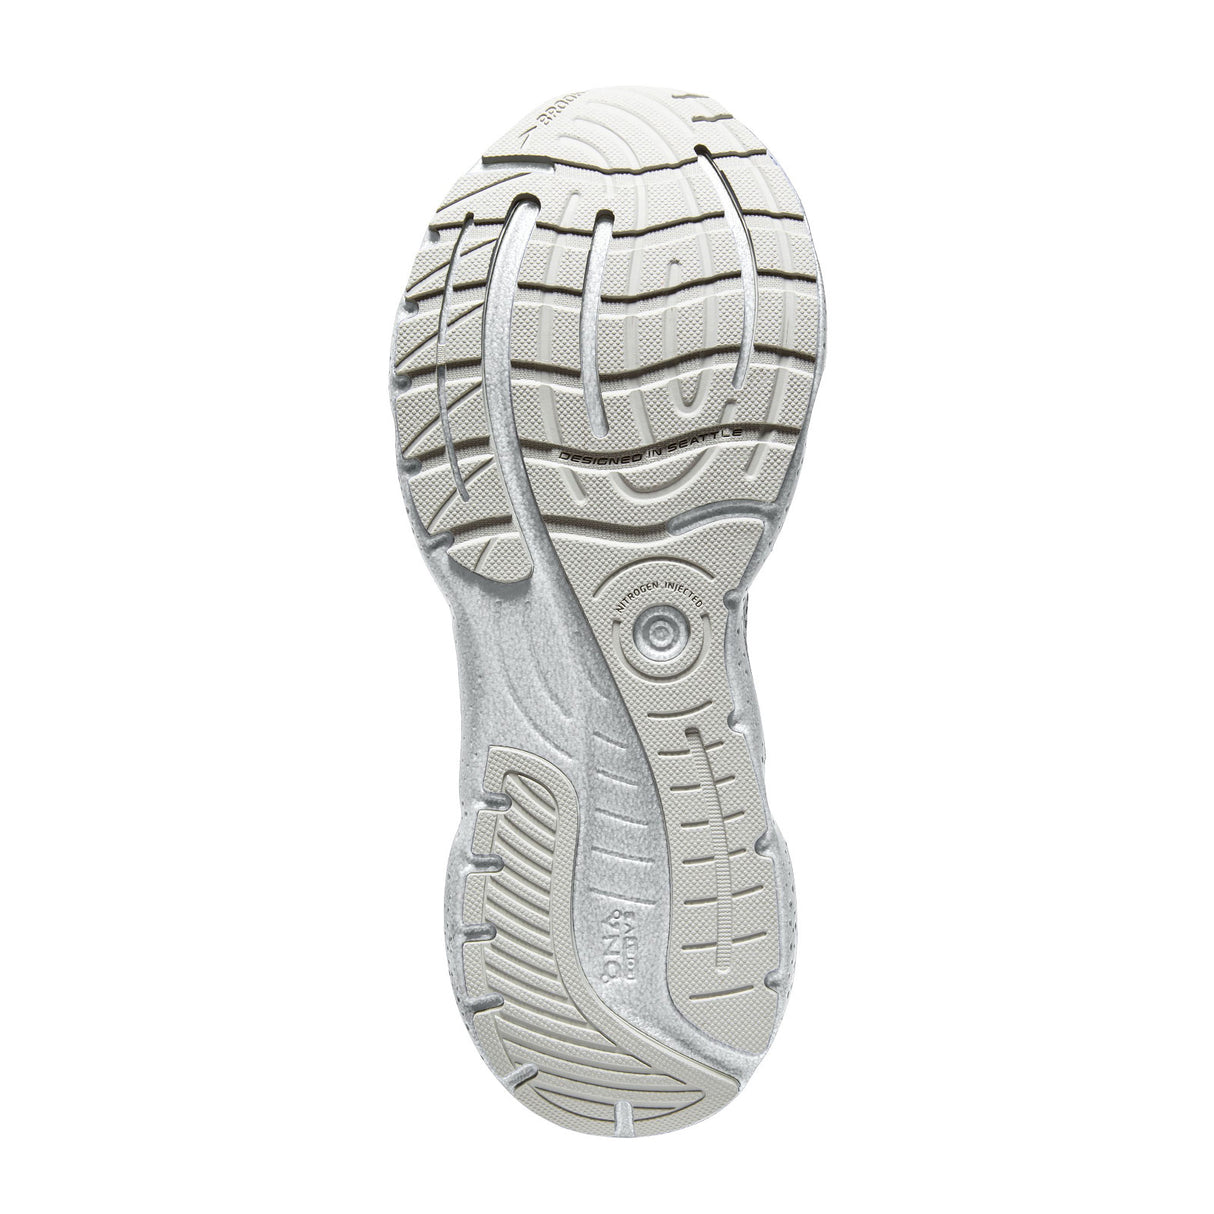 Brooks Glycerin 20 (Men) - Alloy/Grey/Blue Depths Athletic - Running - Neutral - The Heel Shoe Fitters